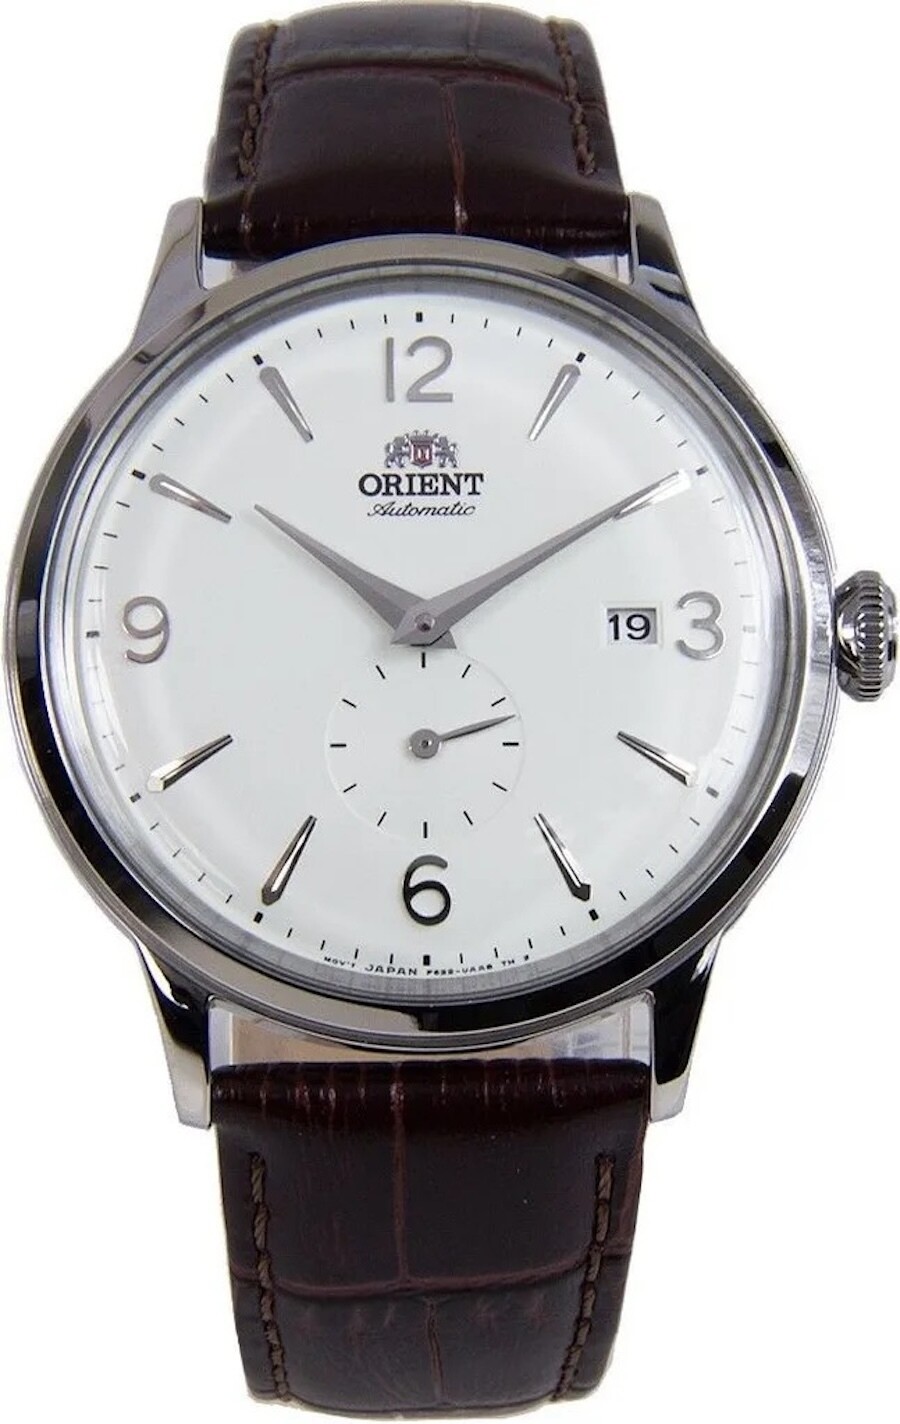 Reloj hombre automático Orient BAMBINO RA-AP0002S SMALL SECONDS dial plata 40.5mm correa cuero marrón RA-AP0002S10B